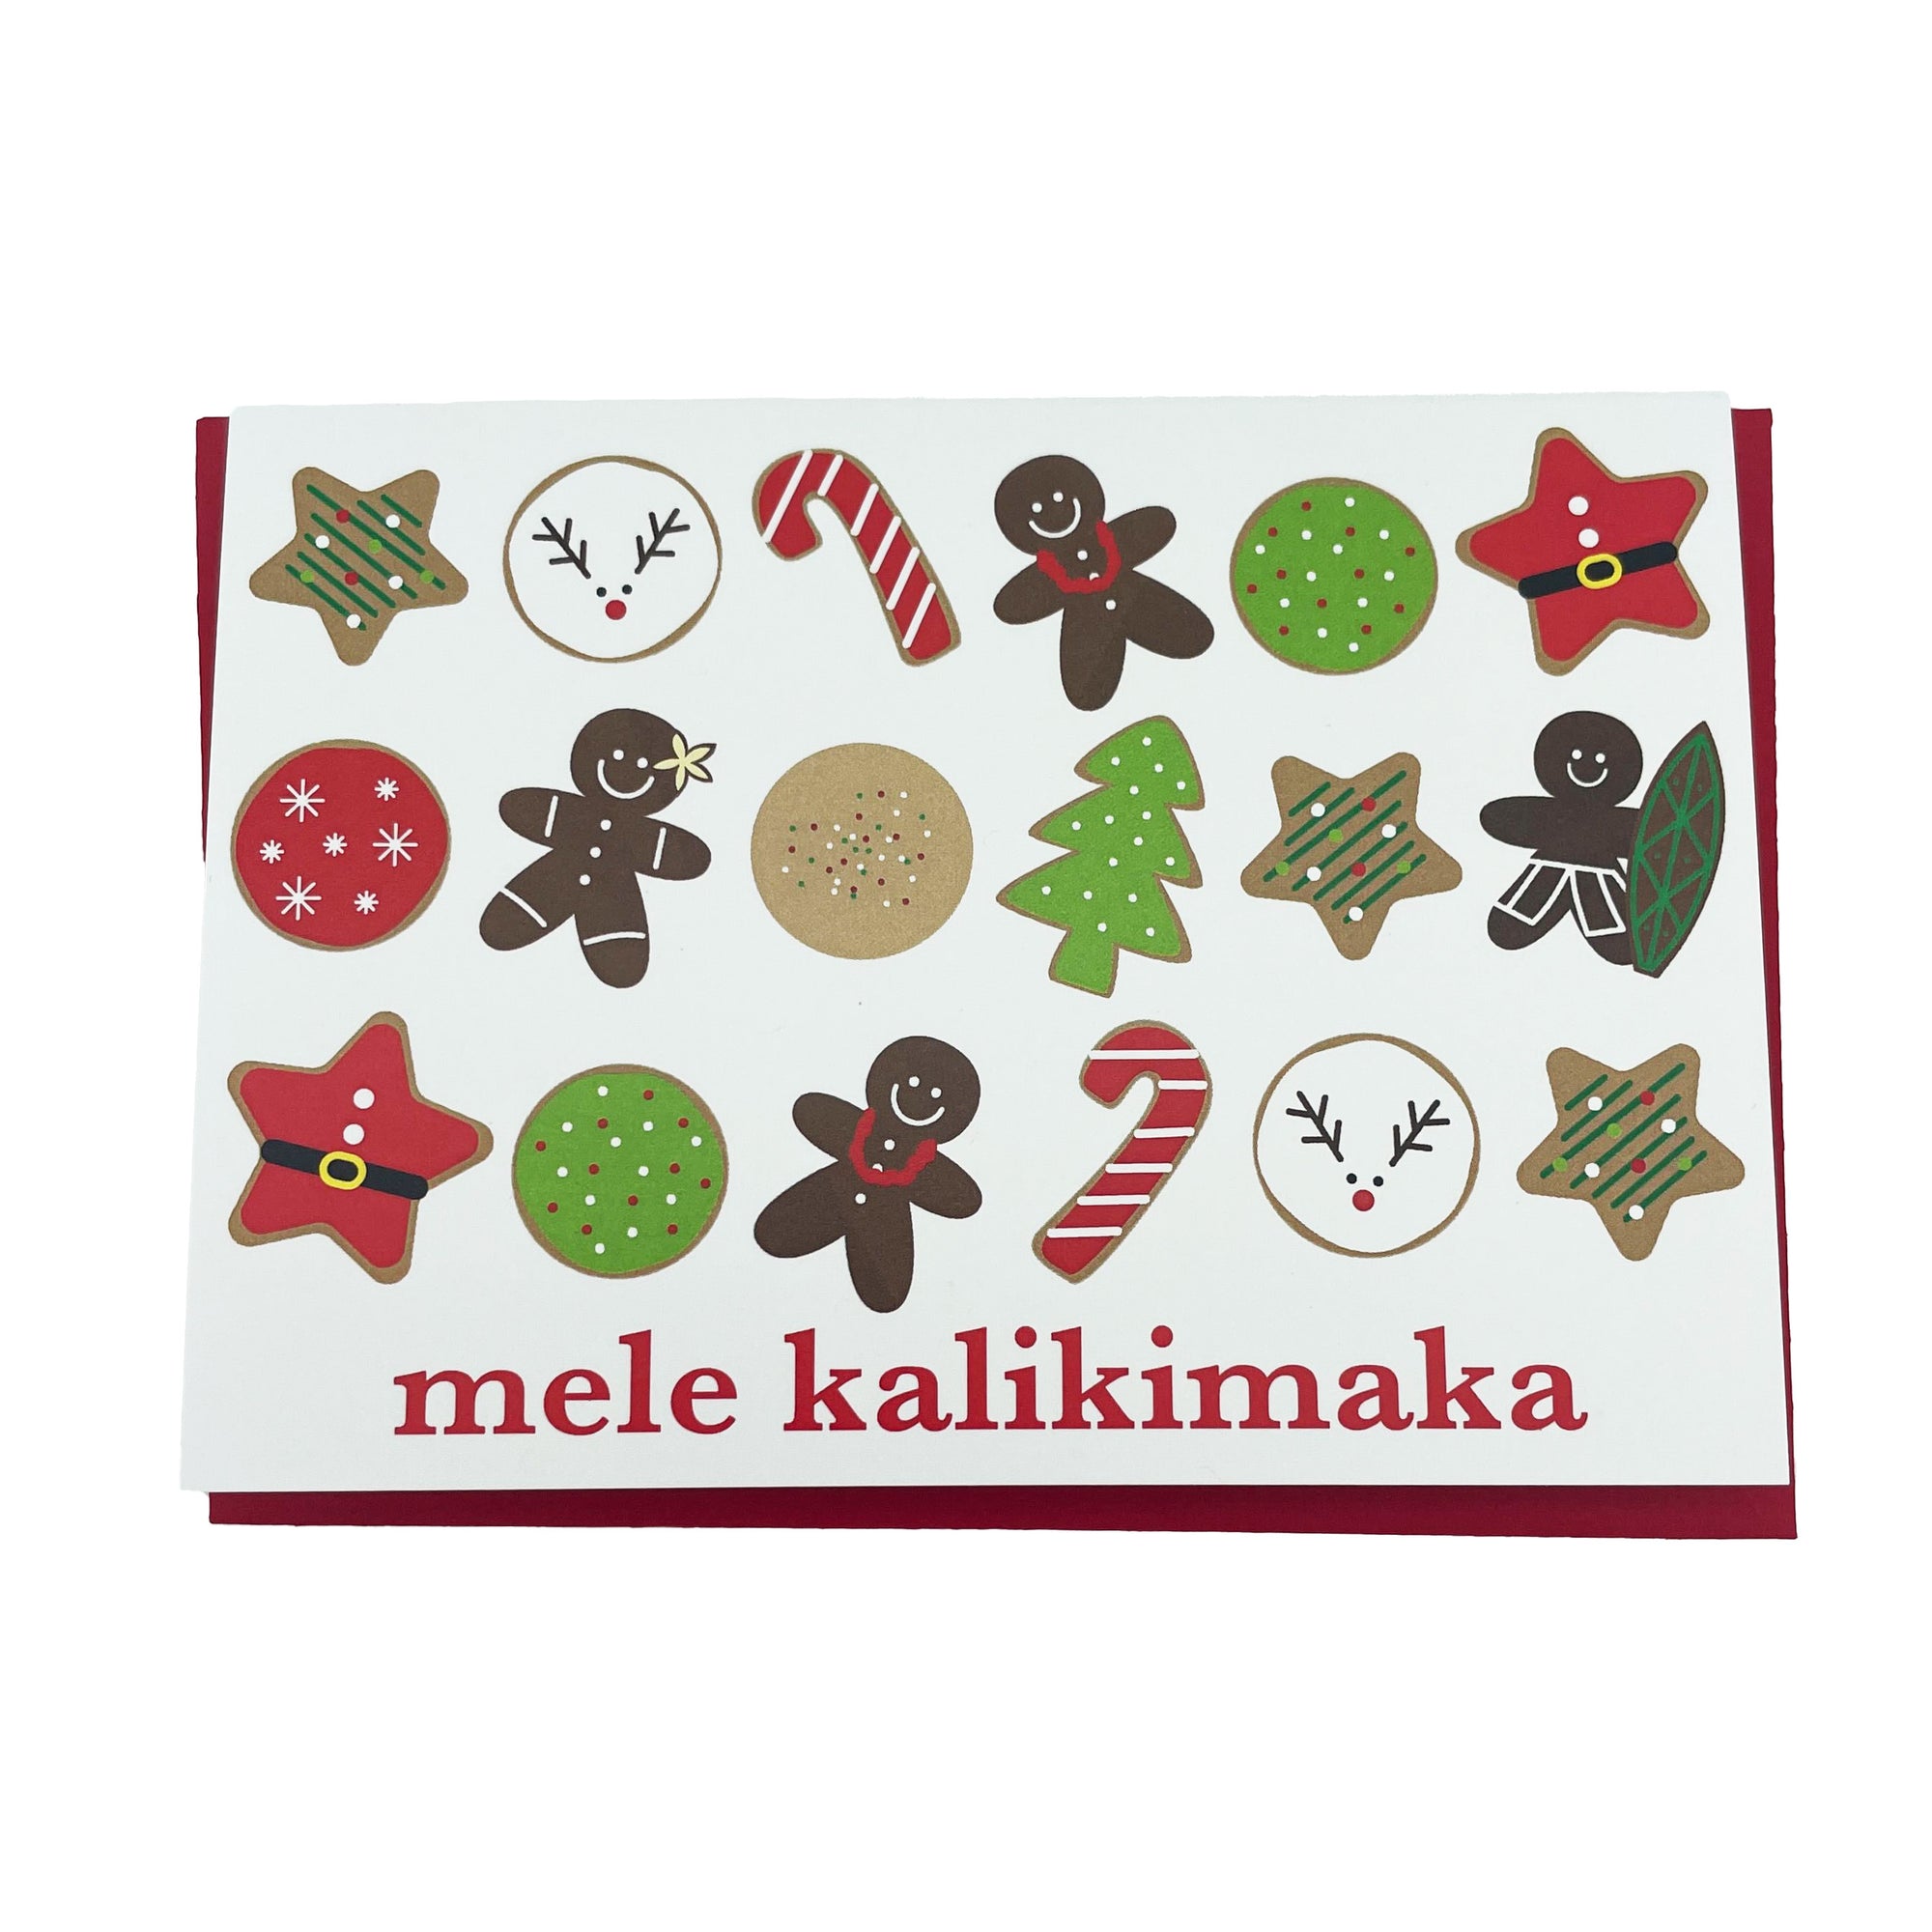 Pop-Up Mākeke - Matsumoto Studio - Mele Kalikimaka Cookies Holiday Card